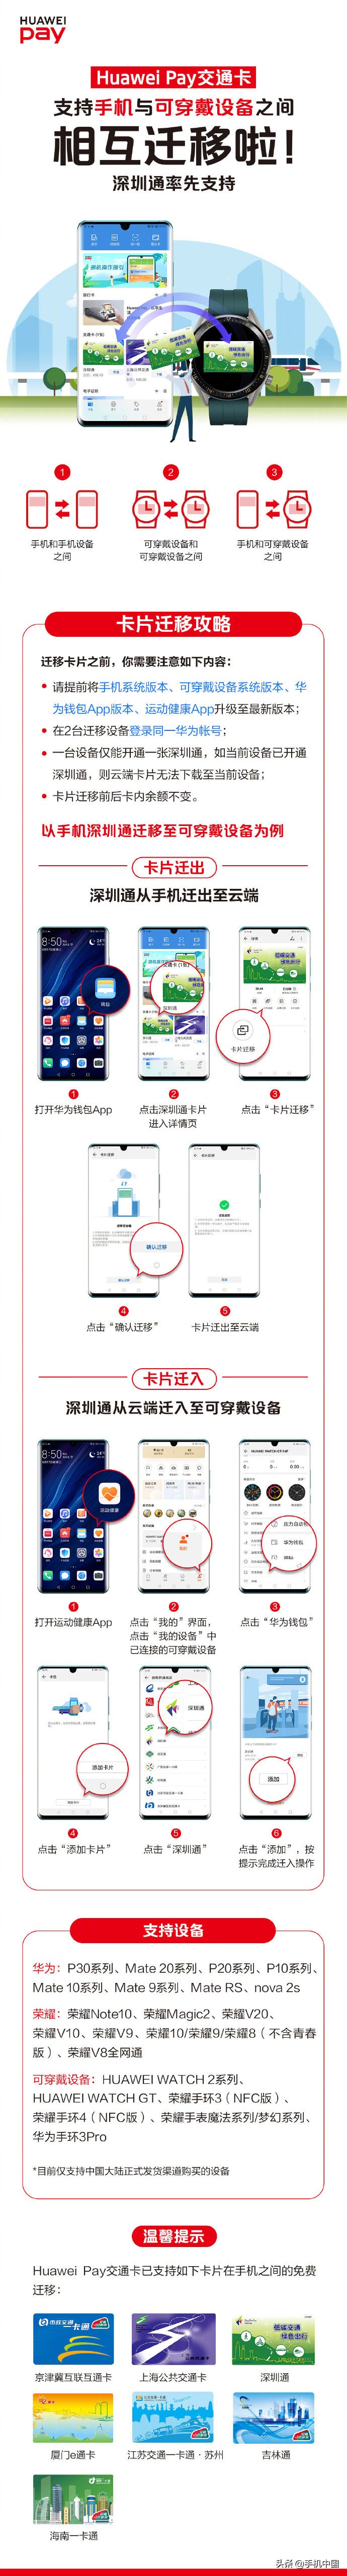 Huawei Pay公共交通卡重磅消息升级 手机上/智能穿戴设备可互转移